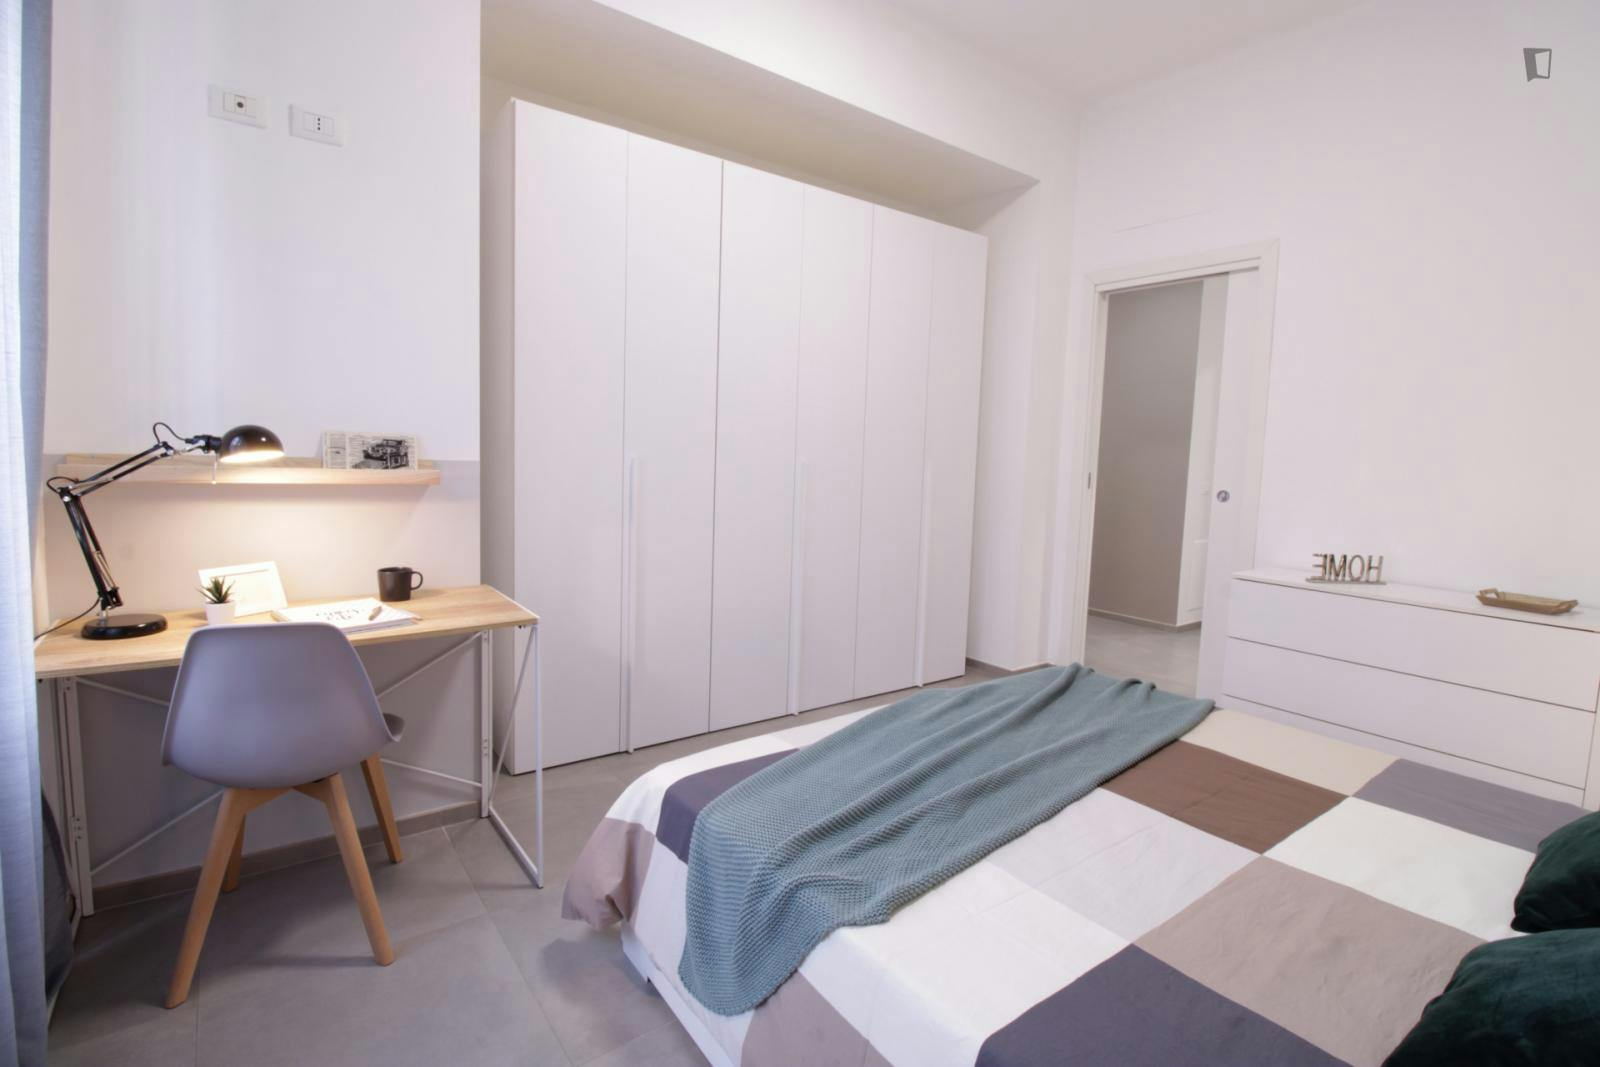 Spacious double bedroom near brescia station